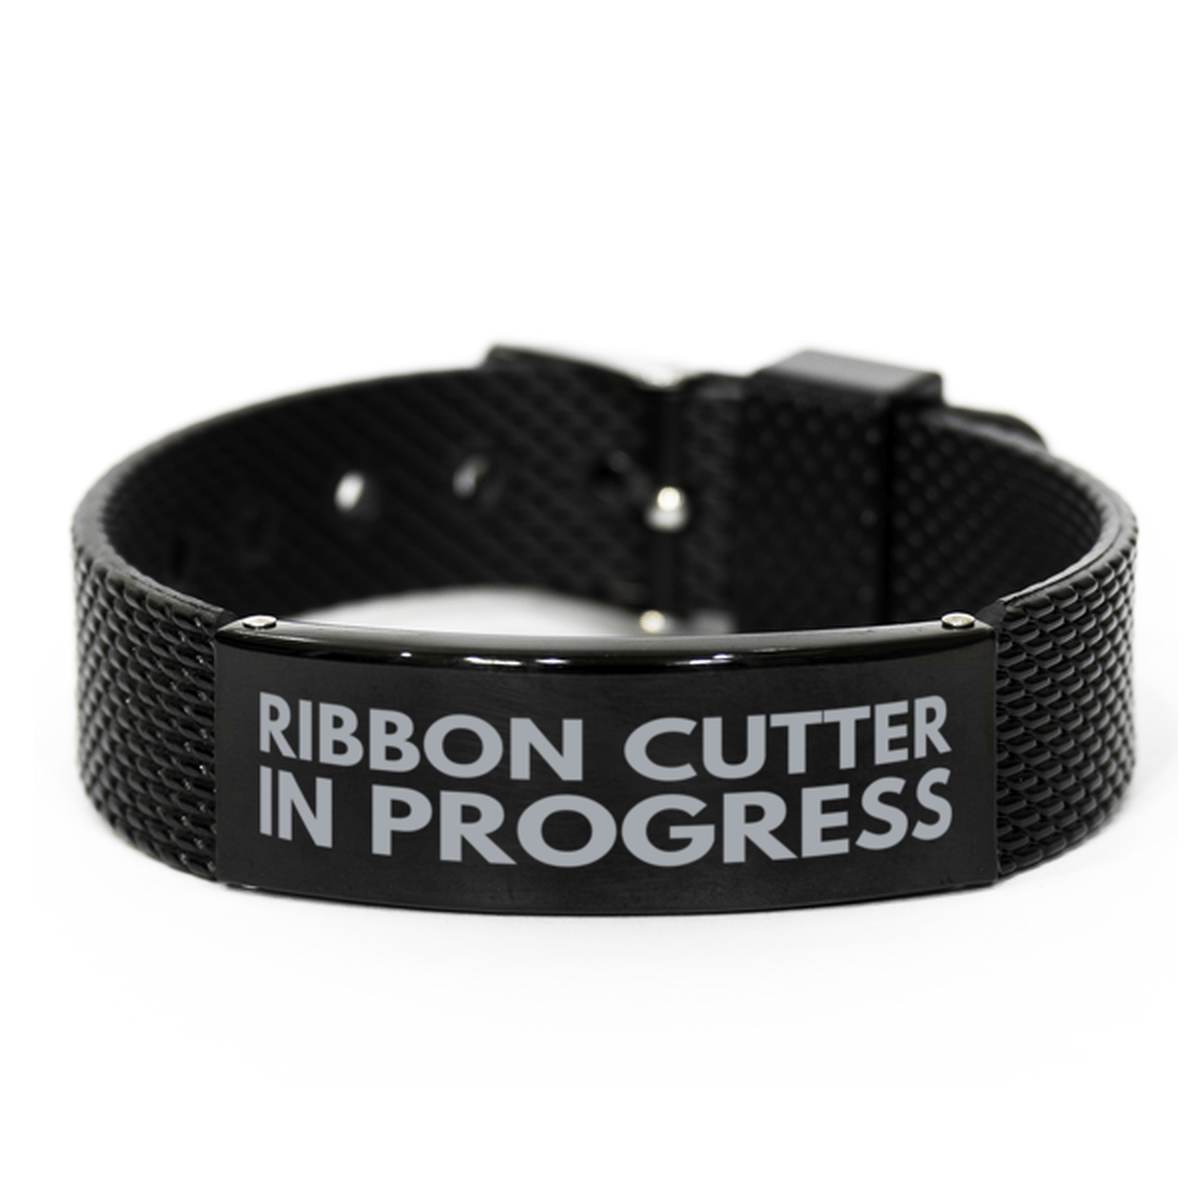 Inspirational Ribbon Cutter Black Shark Mesh Bracelet, Ribbon Cutter In Progress, Best Graduation Gifts for Students